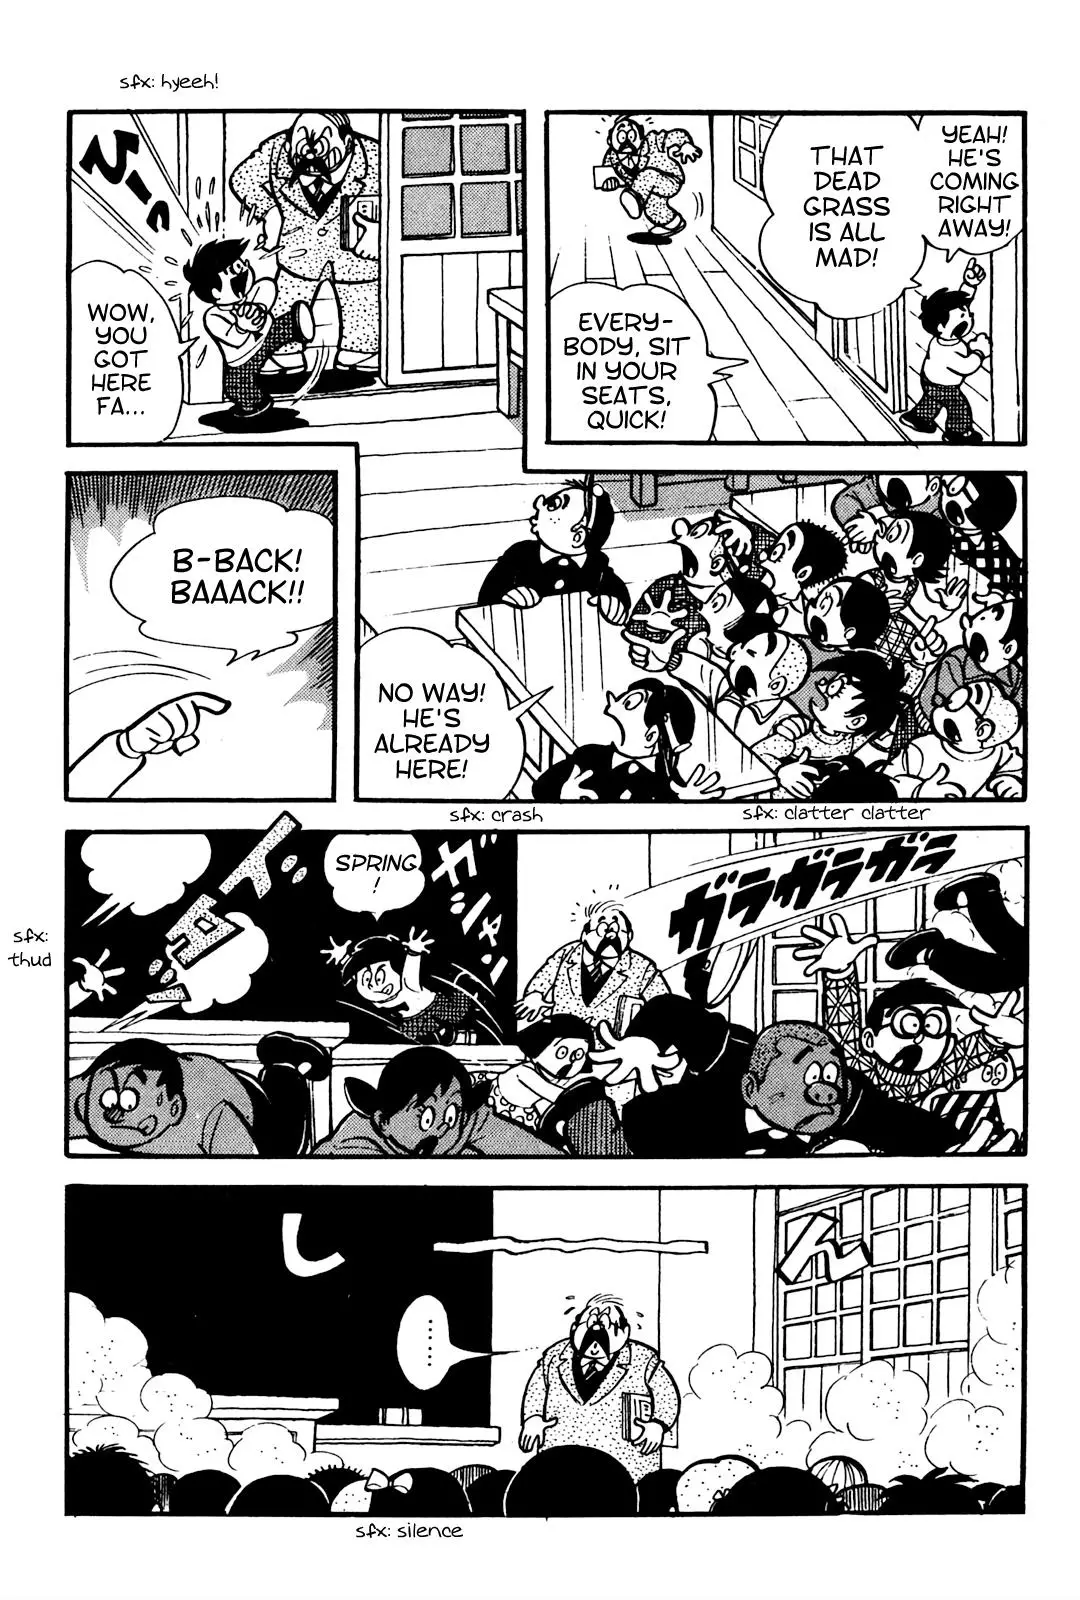 Tetsuya Chiba Short Stories - Shojo Manga - 1 page 9-5e5b975b